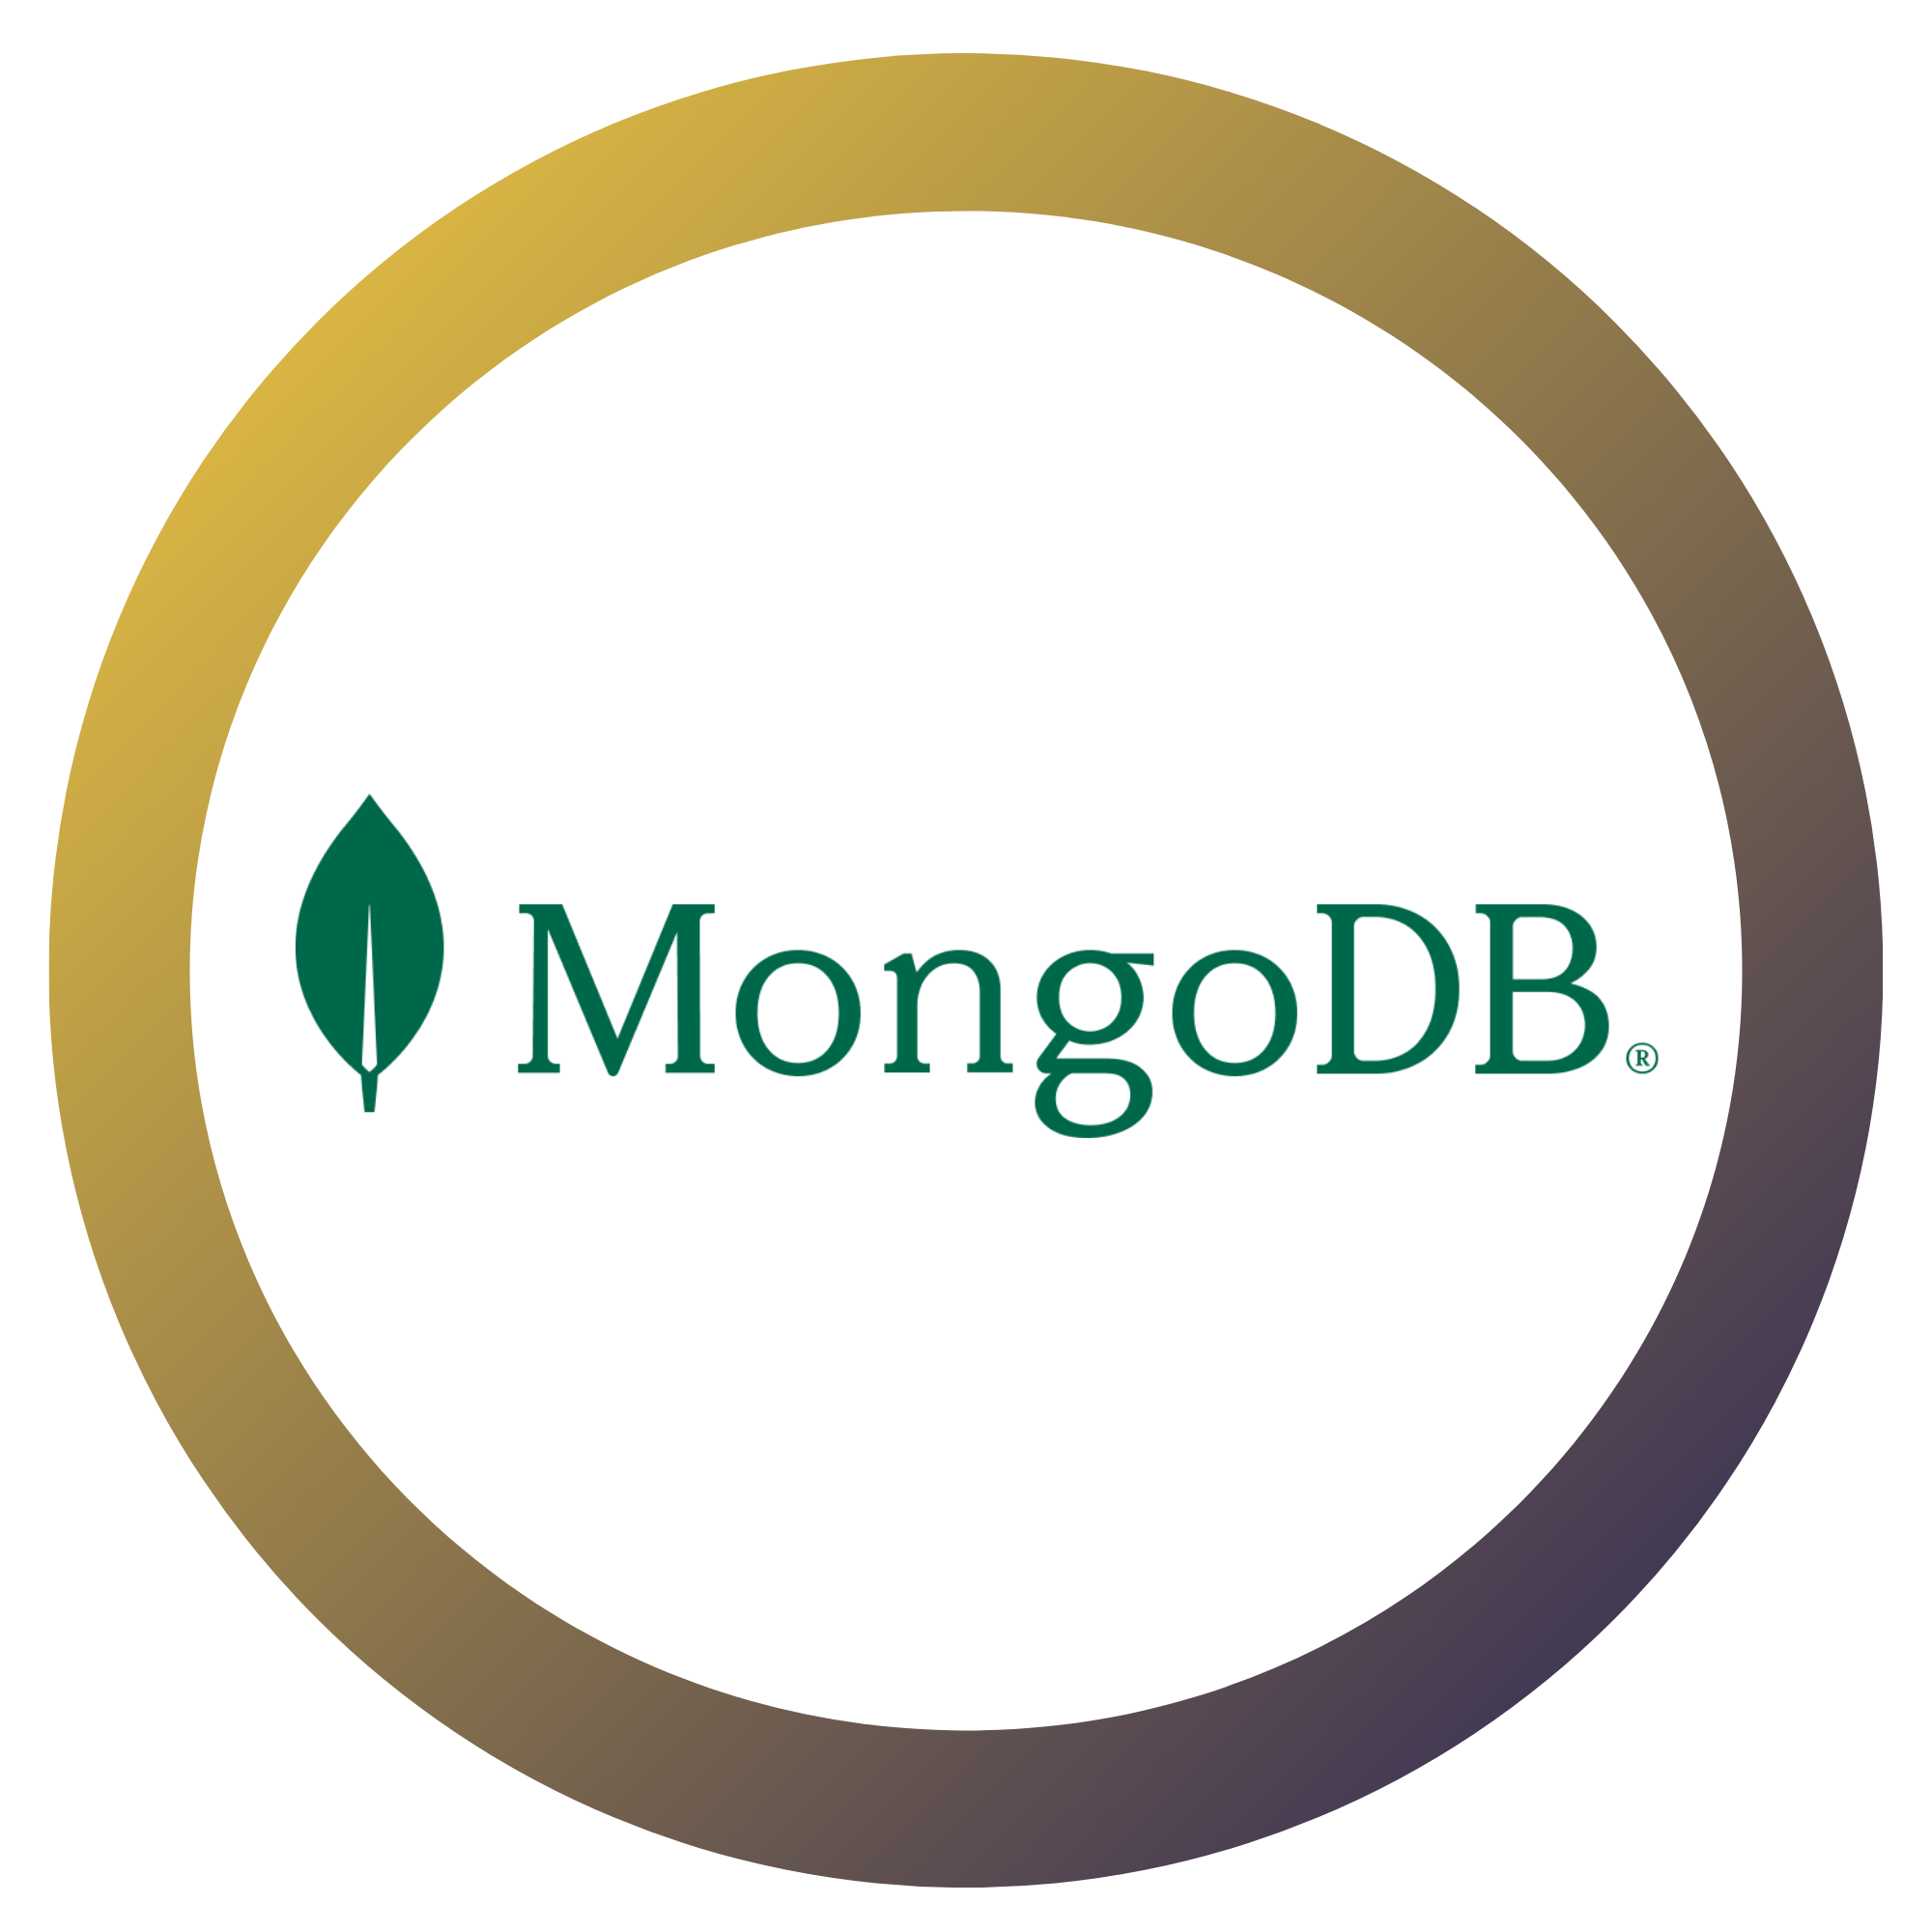 MongoDB is a Campus Forward Award Winner 2022